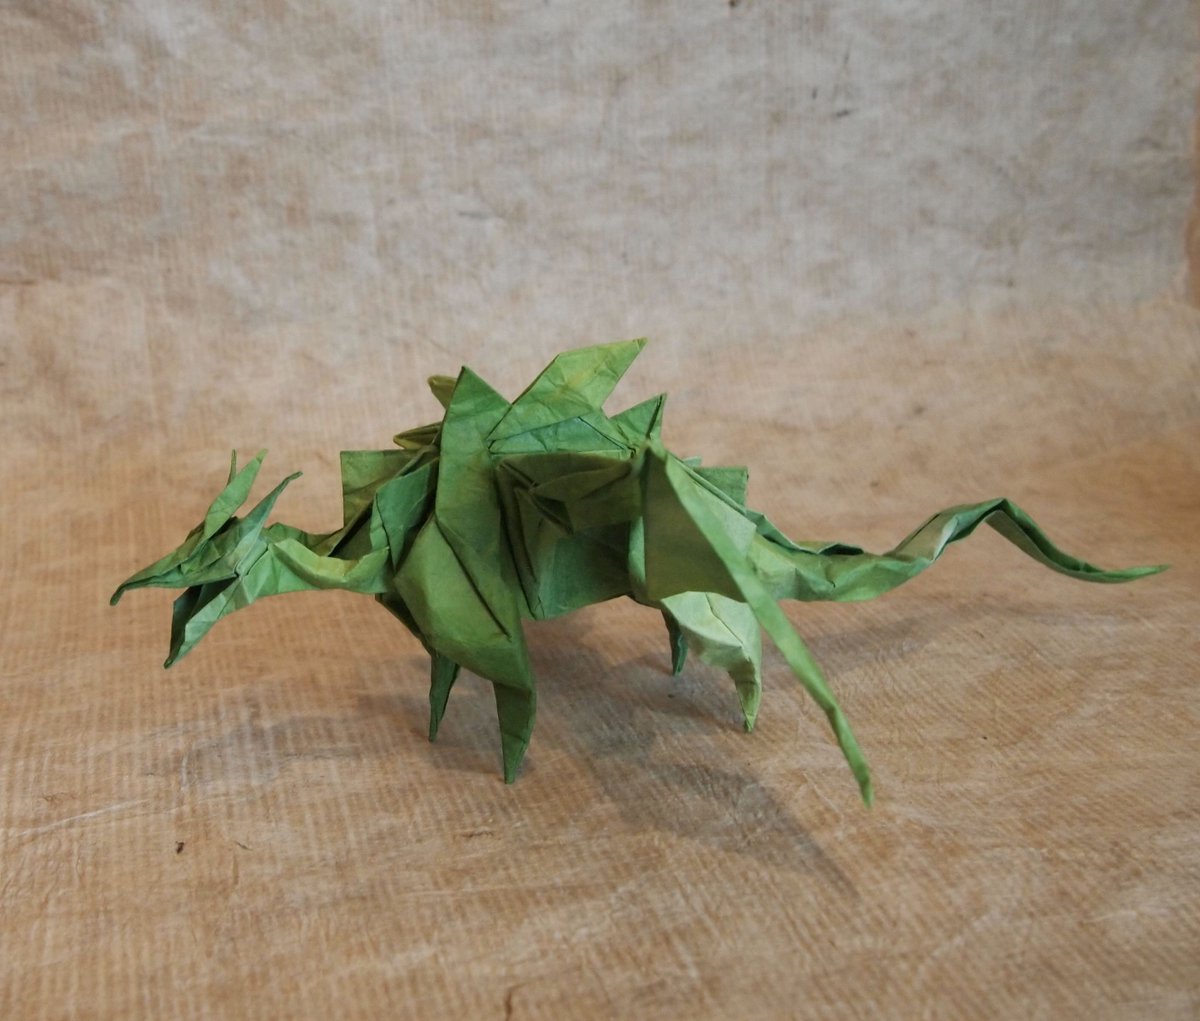 Origami Brasil En Twitter Rt Kobashi6 折り紙作品 クレインドラゴン 創作 折り 一匹柴犬 この前折った鶴 ドラゴンの顔を変えて全体的に折り込んでみた 折り図にするなら４枚目 せっかくドラゴンが折れたから 折り図化したい気持ちだけはある 折り紙